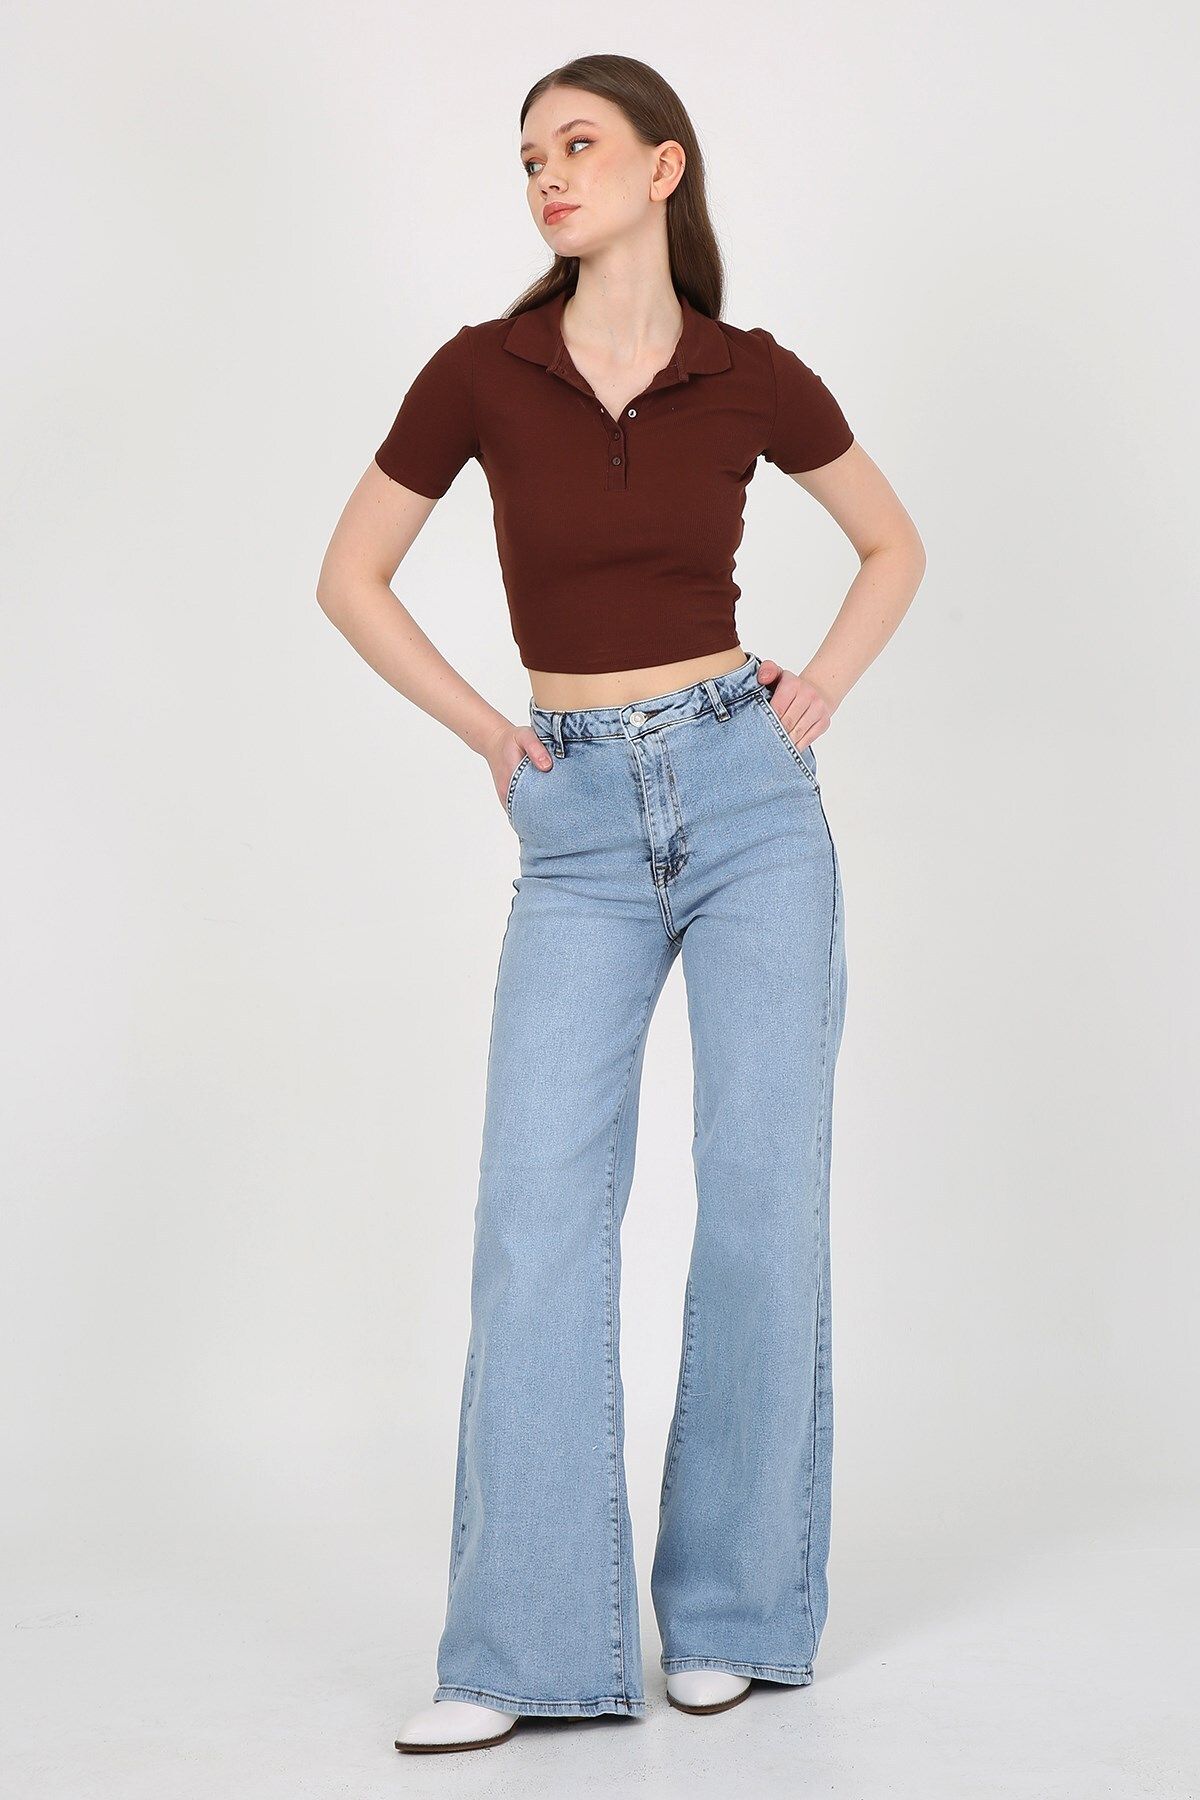 Twister Jeans Kadın Pantolon Asia 9413-01 Blue